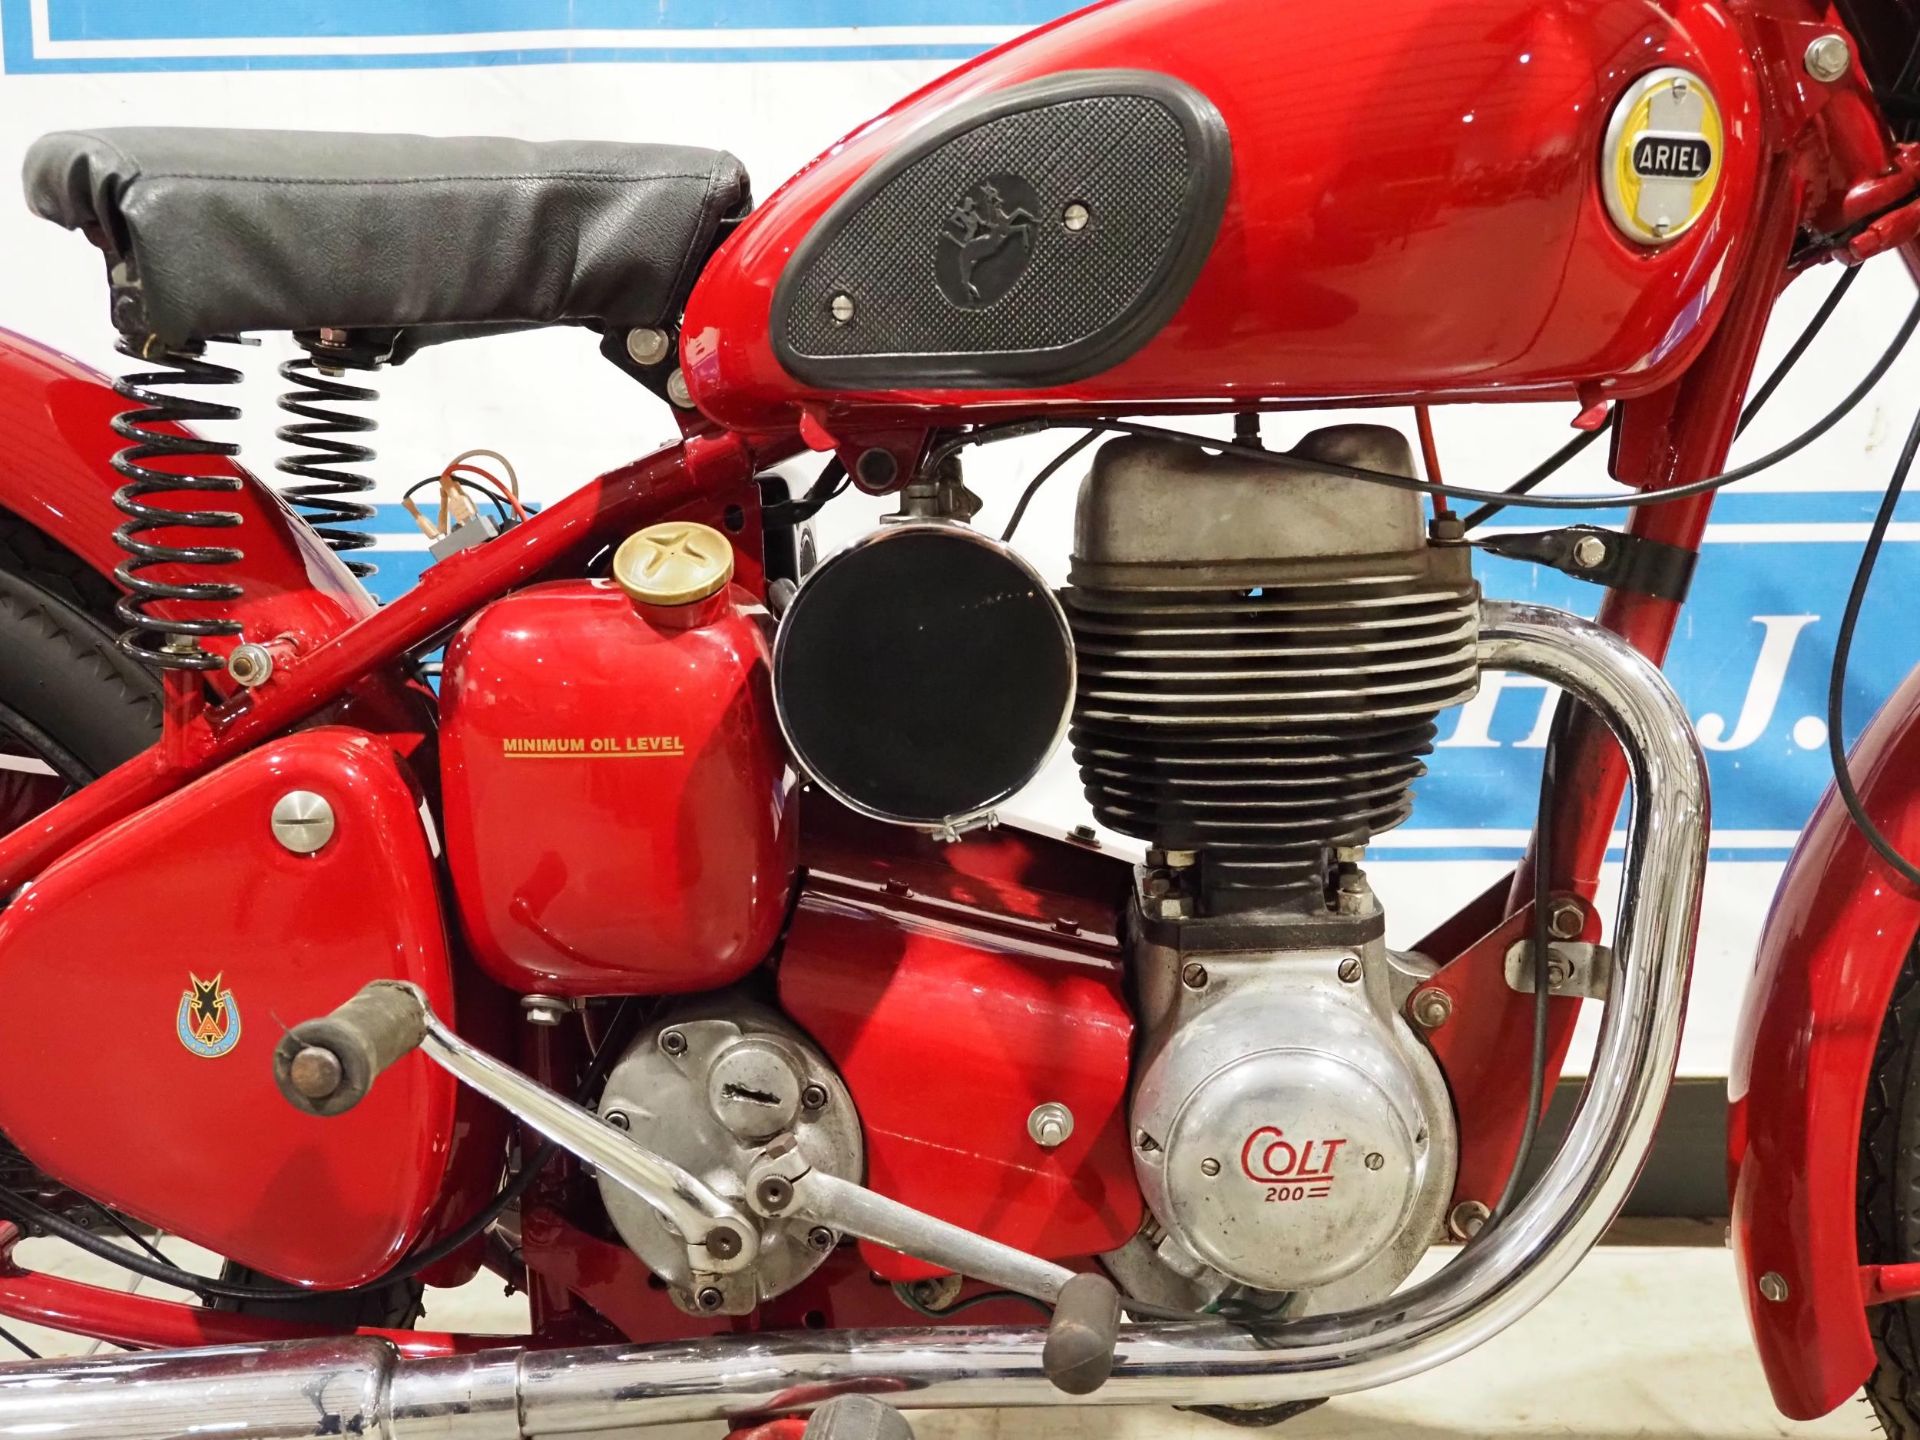 Ariel Colt motorcycle. 200cc Engine No. BLA 6086 Frame No. ST3225. Restored. No docs - Image 2 of 6